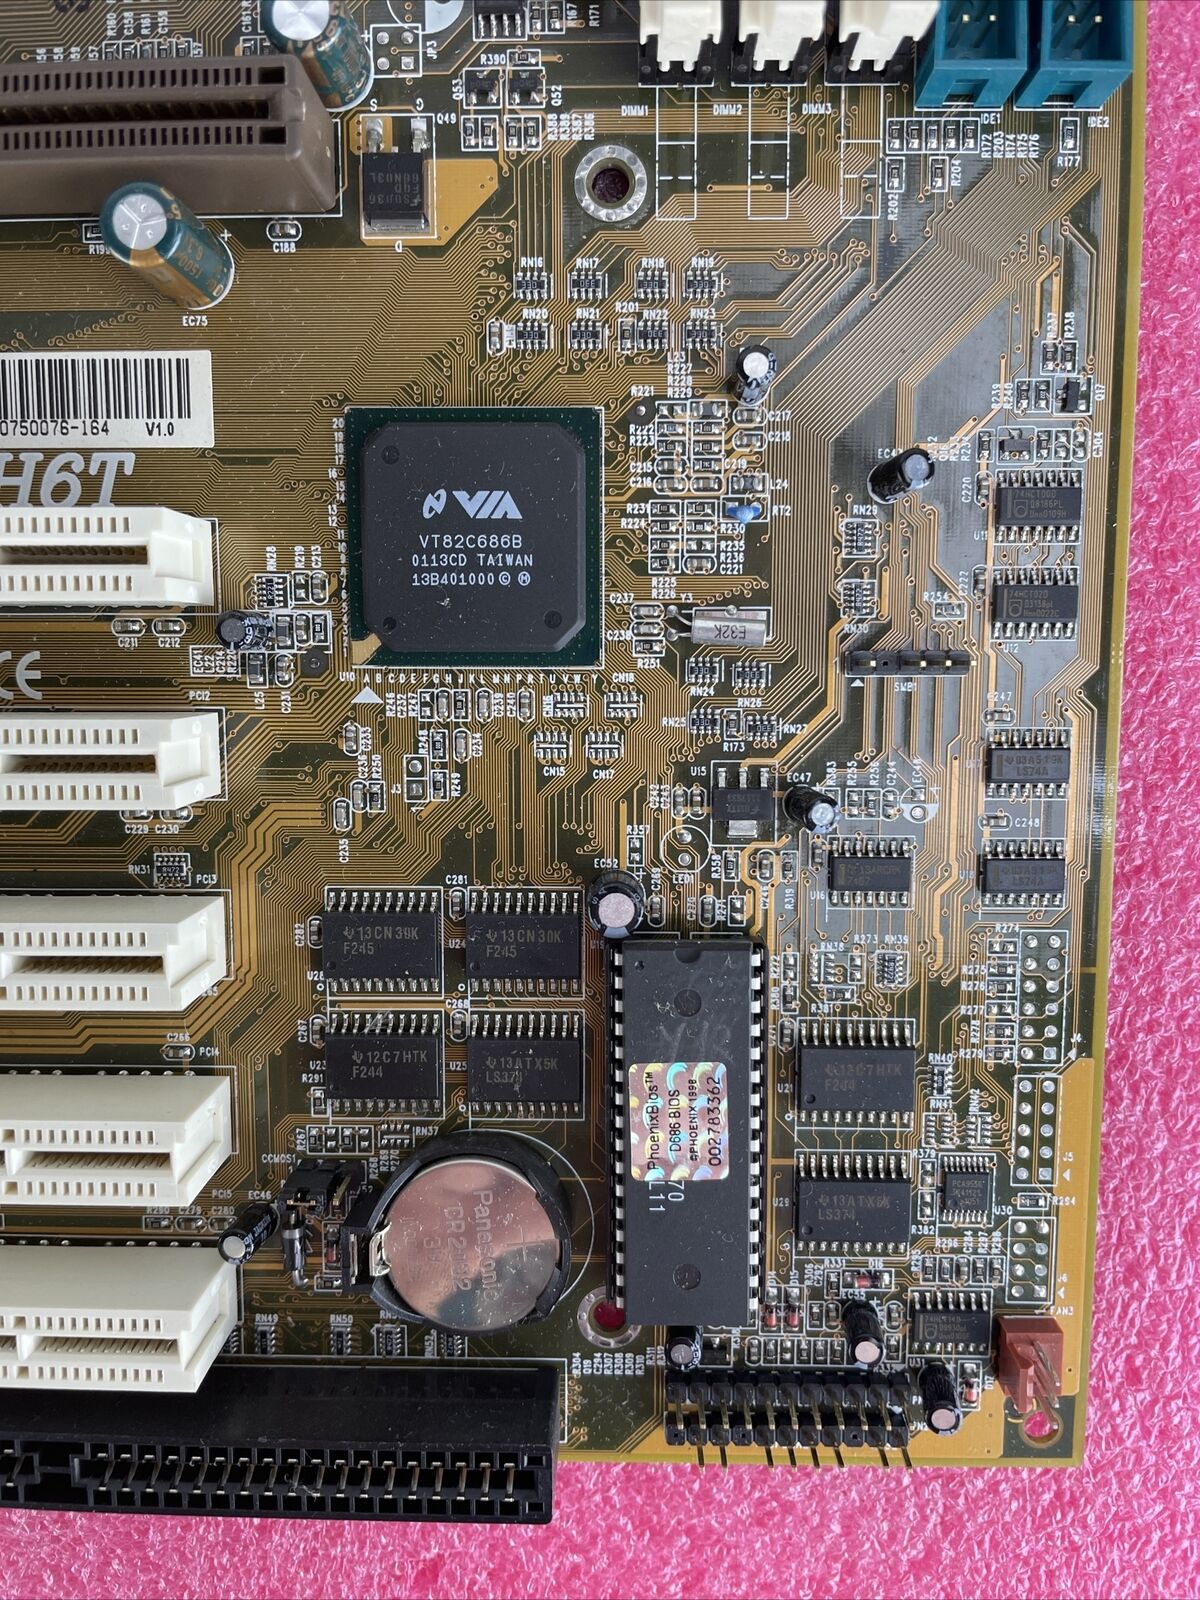 ABIT-VH6T Motherboard Intel Pentium III 333MHz No RAM w/Shield